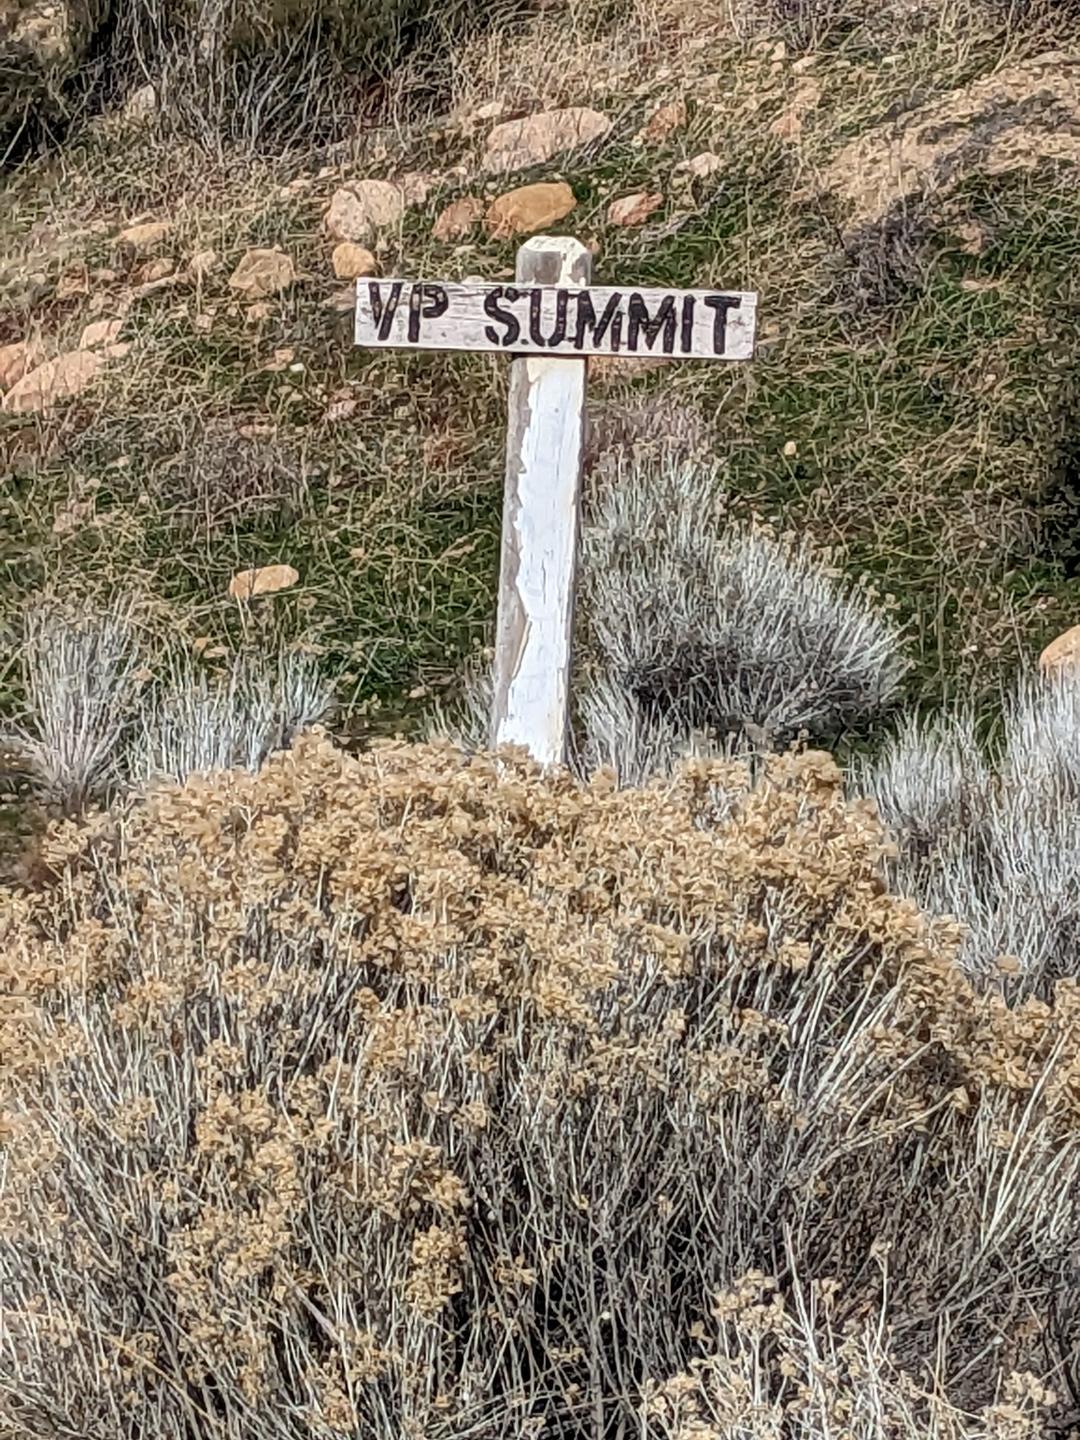 VP Summit.jpg